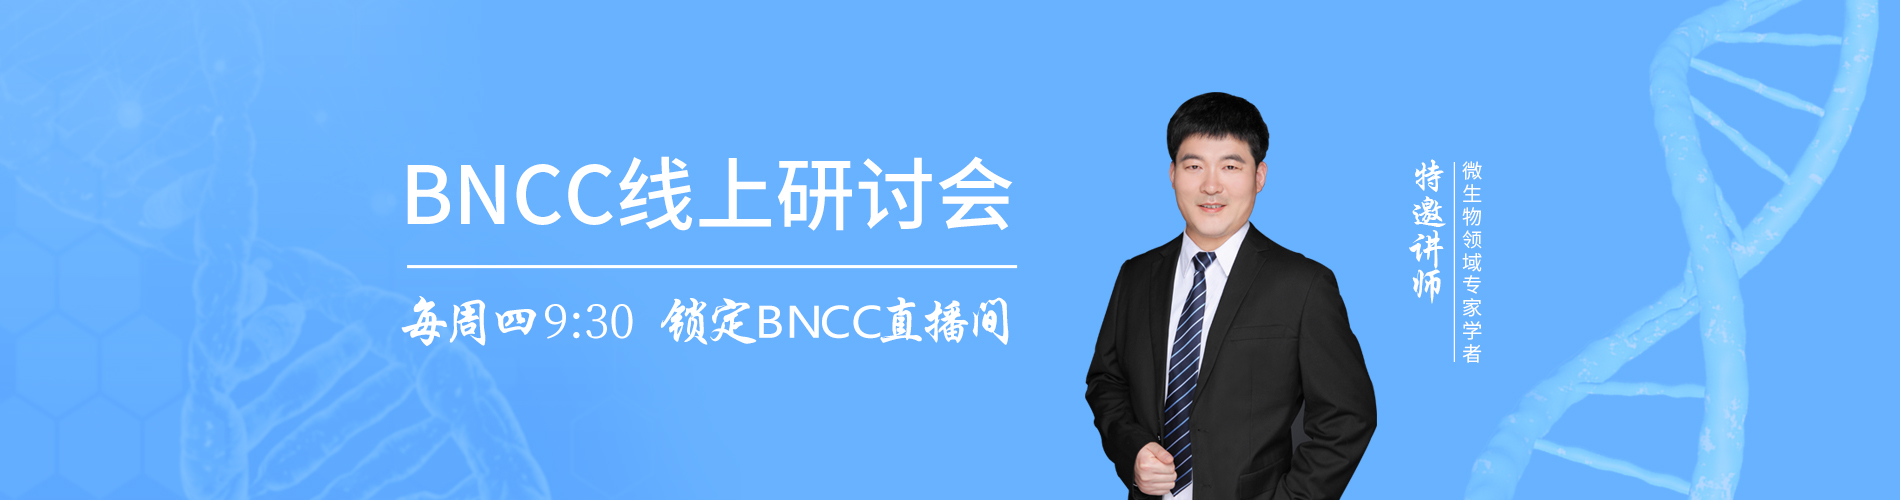 BNCC線上研討會